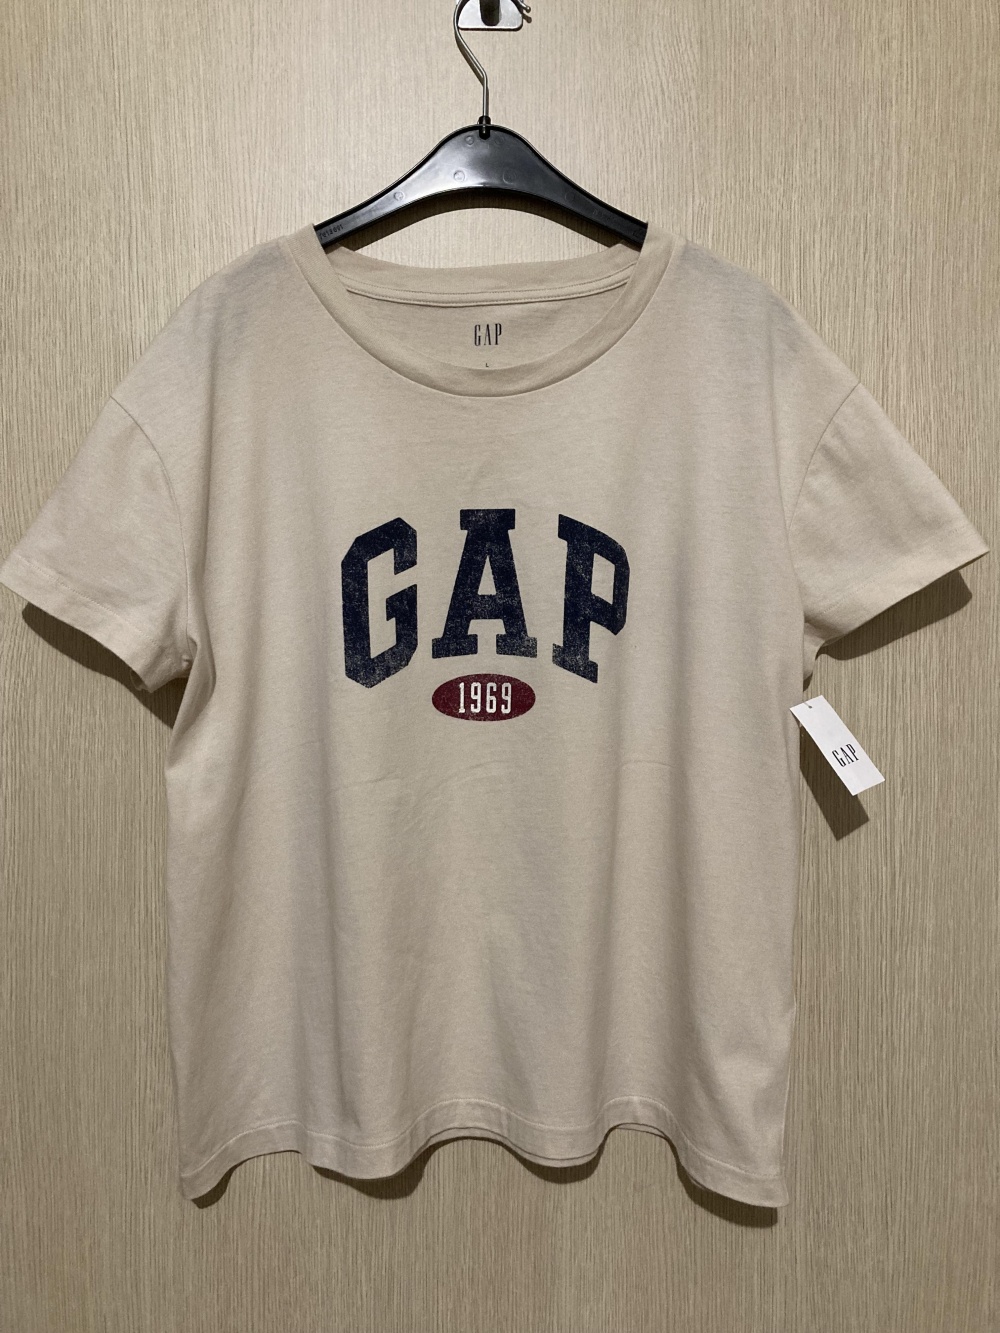 Футболка “ Gap ”, L размер